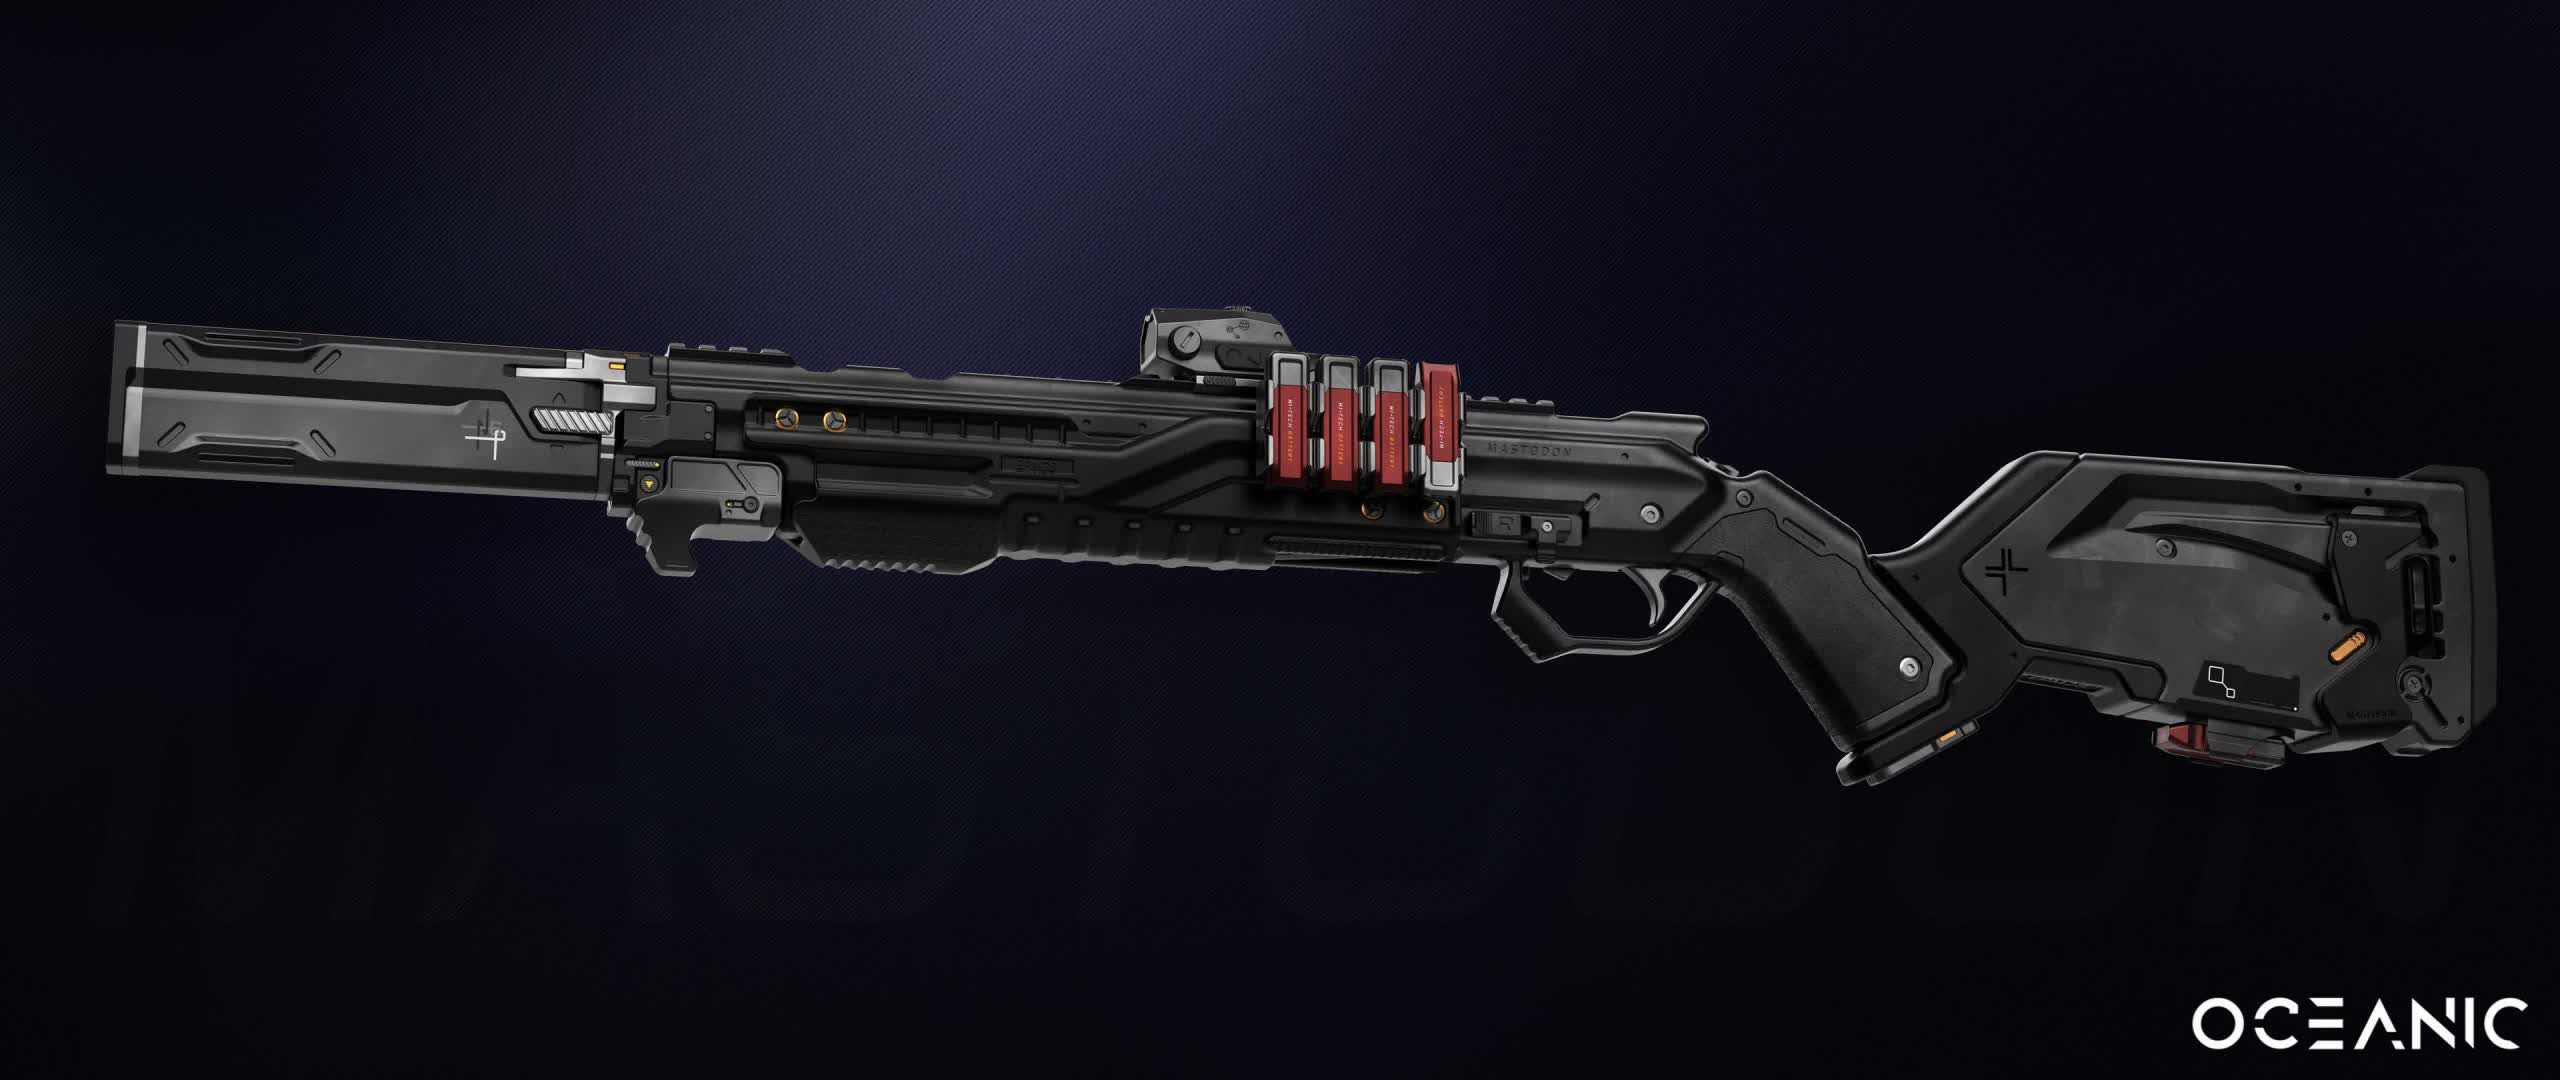 Kalashnikov denies it stole the design of a video game weapon for its shotgun